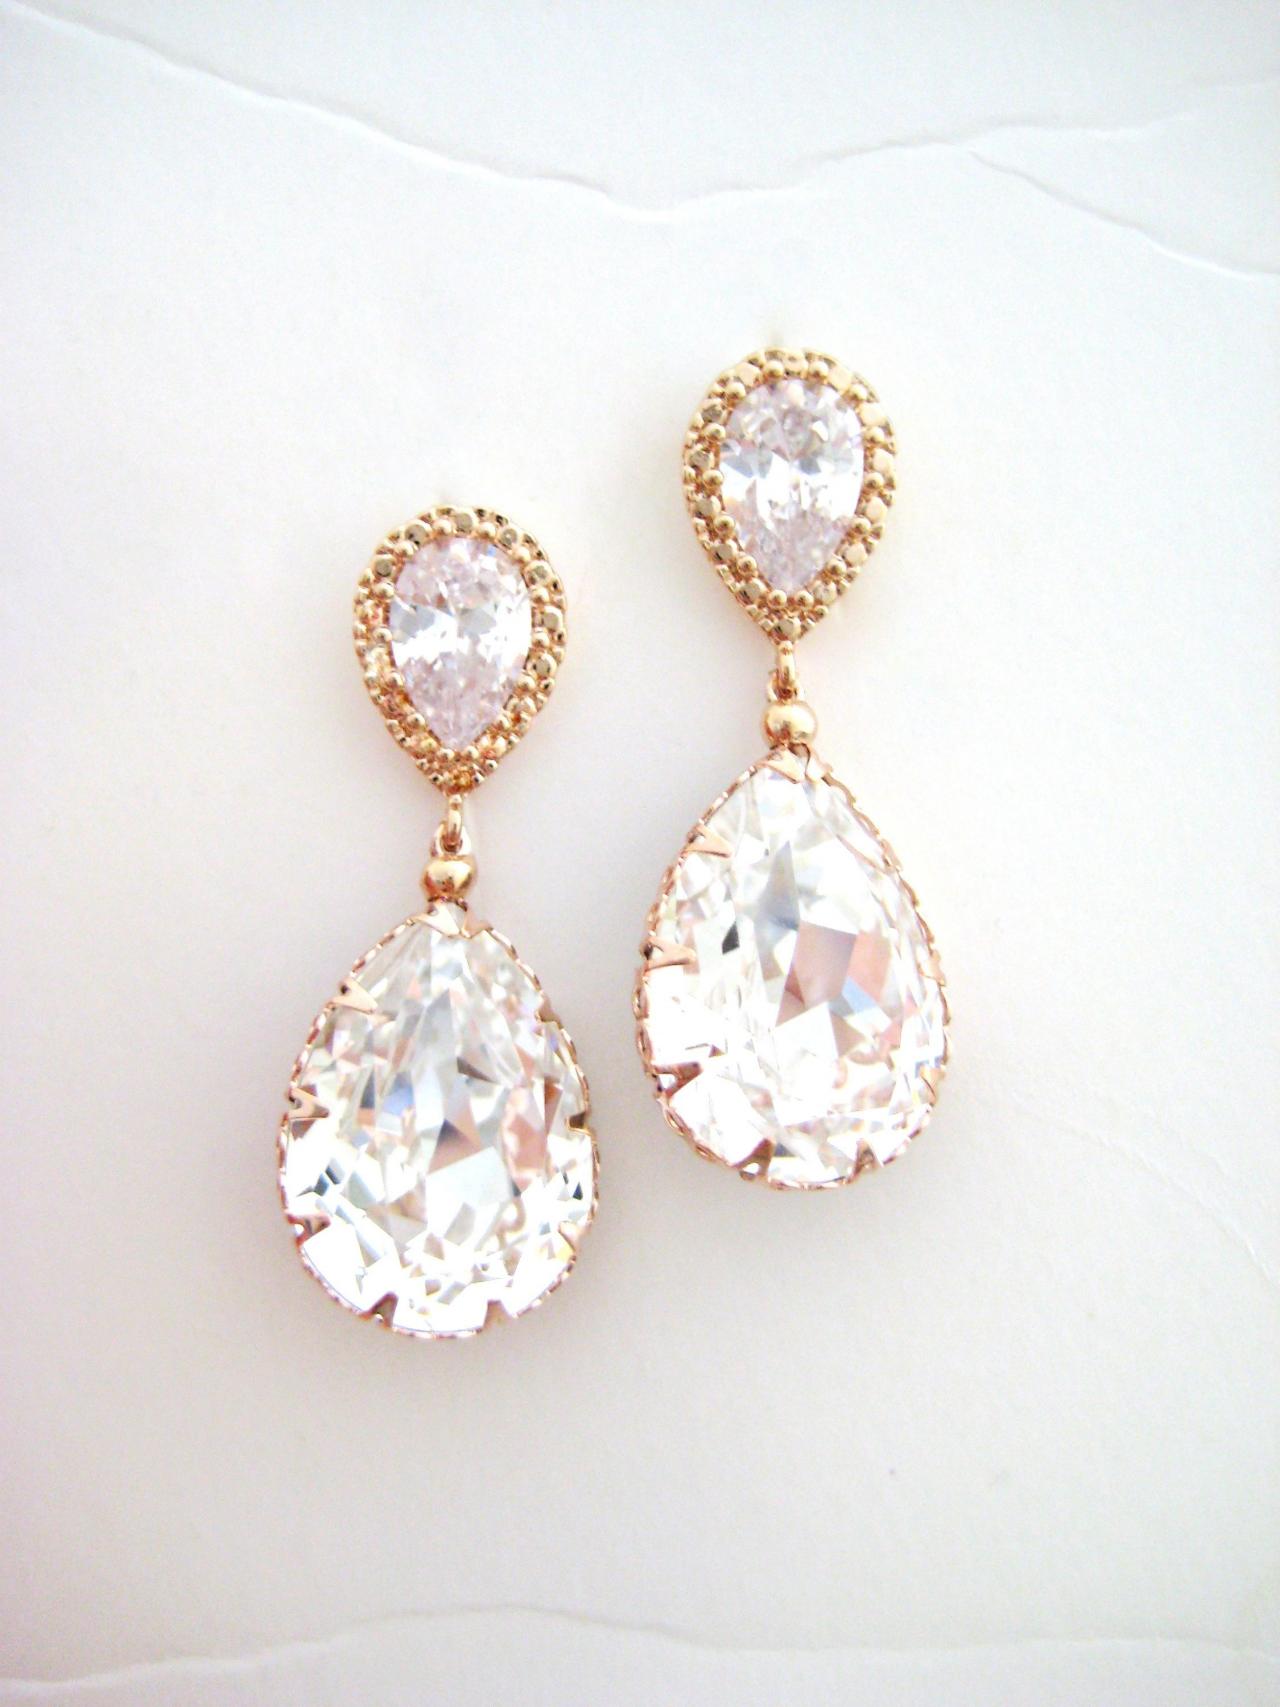 Bridal Crystal Earrings Rose Gold Wedding Jewelry Swarovski Crystal Teardrop Earrings Bridesmaid Gift Bridal Party Earrings (e008)